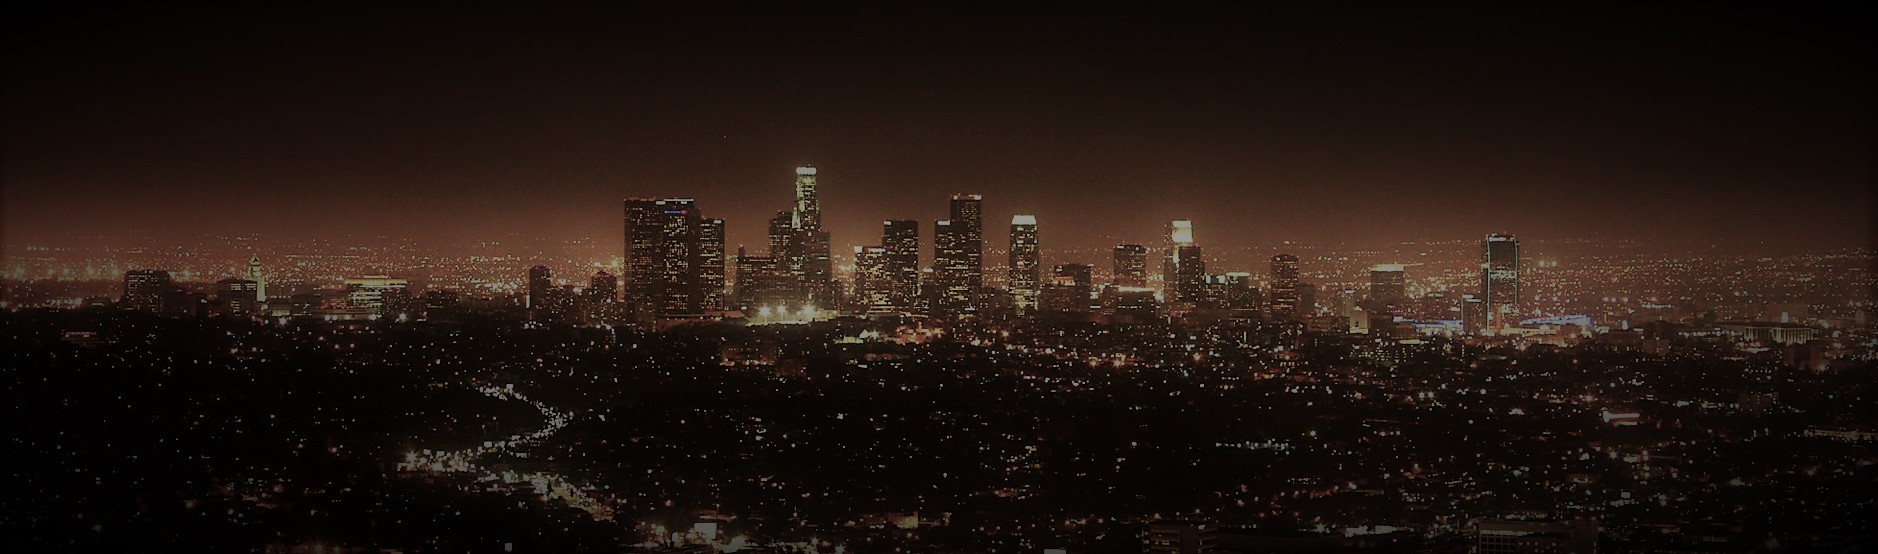 Los Angeles City Night Wallpaper - Cityscape - HD Wallpaper 